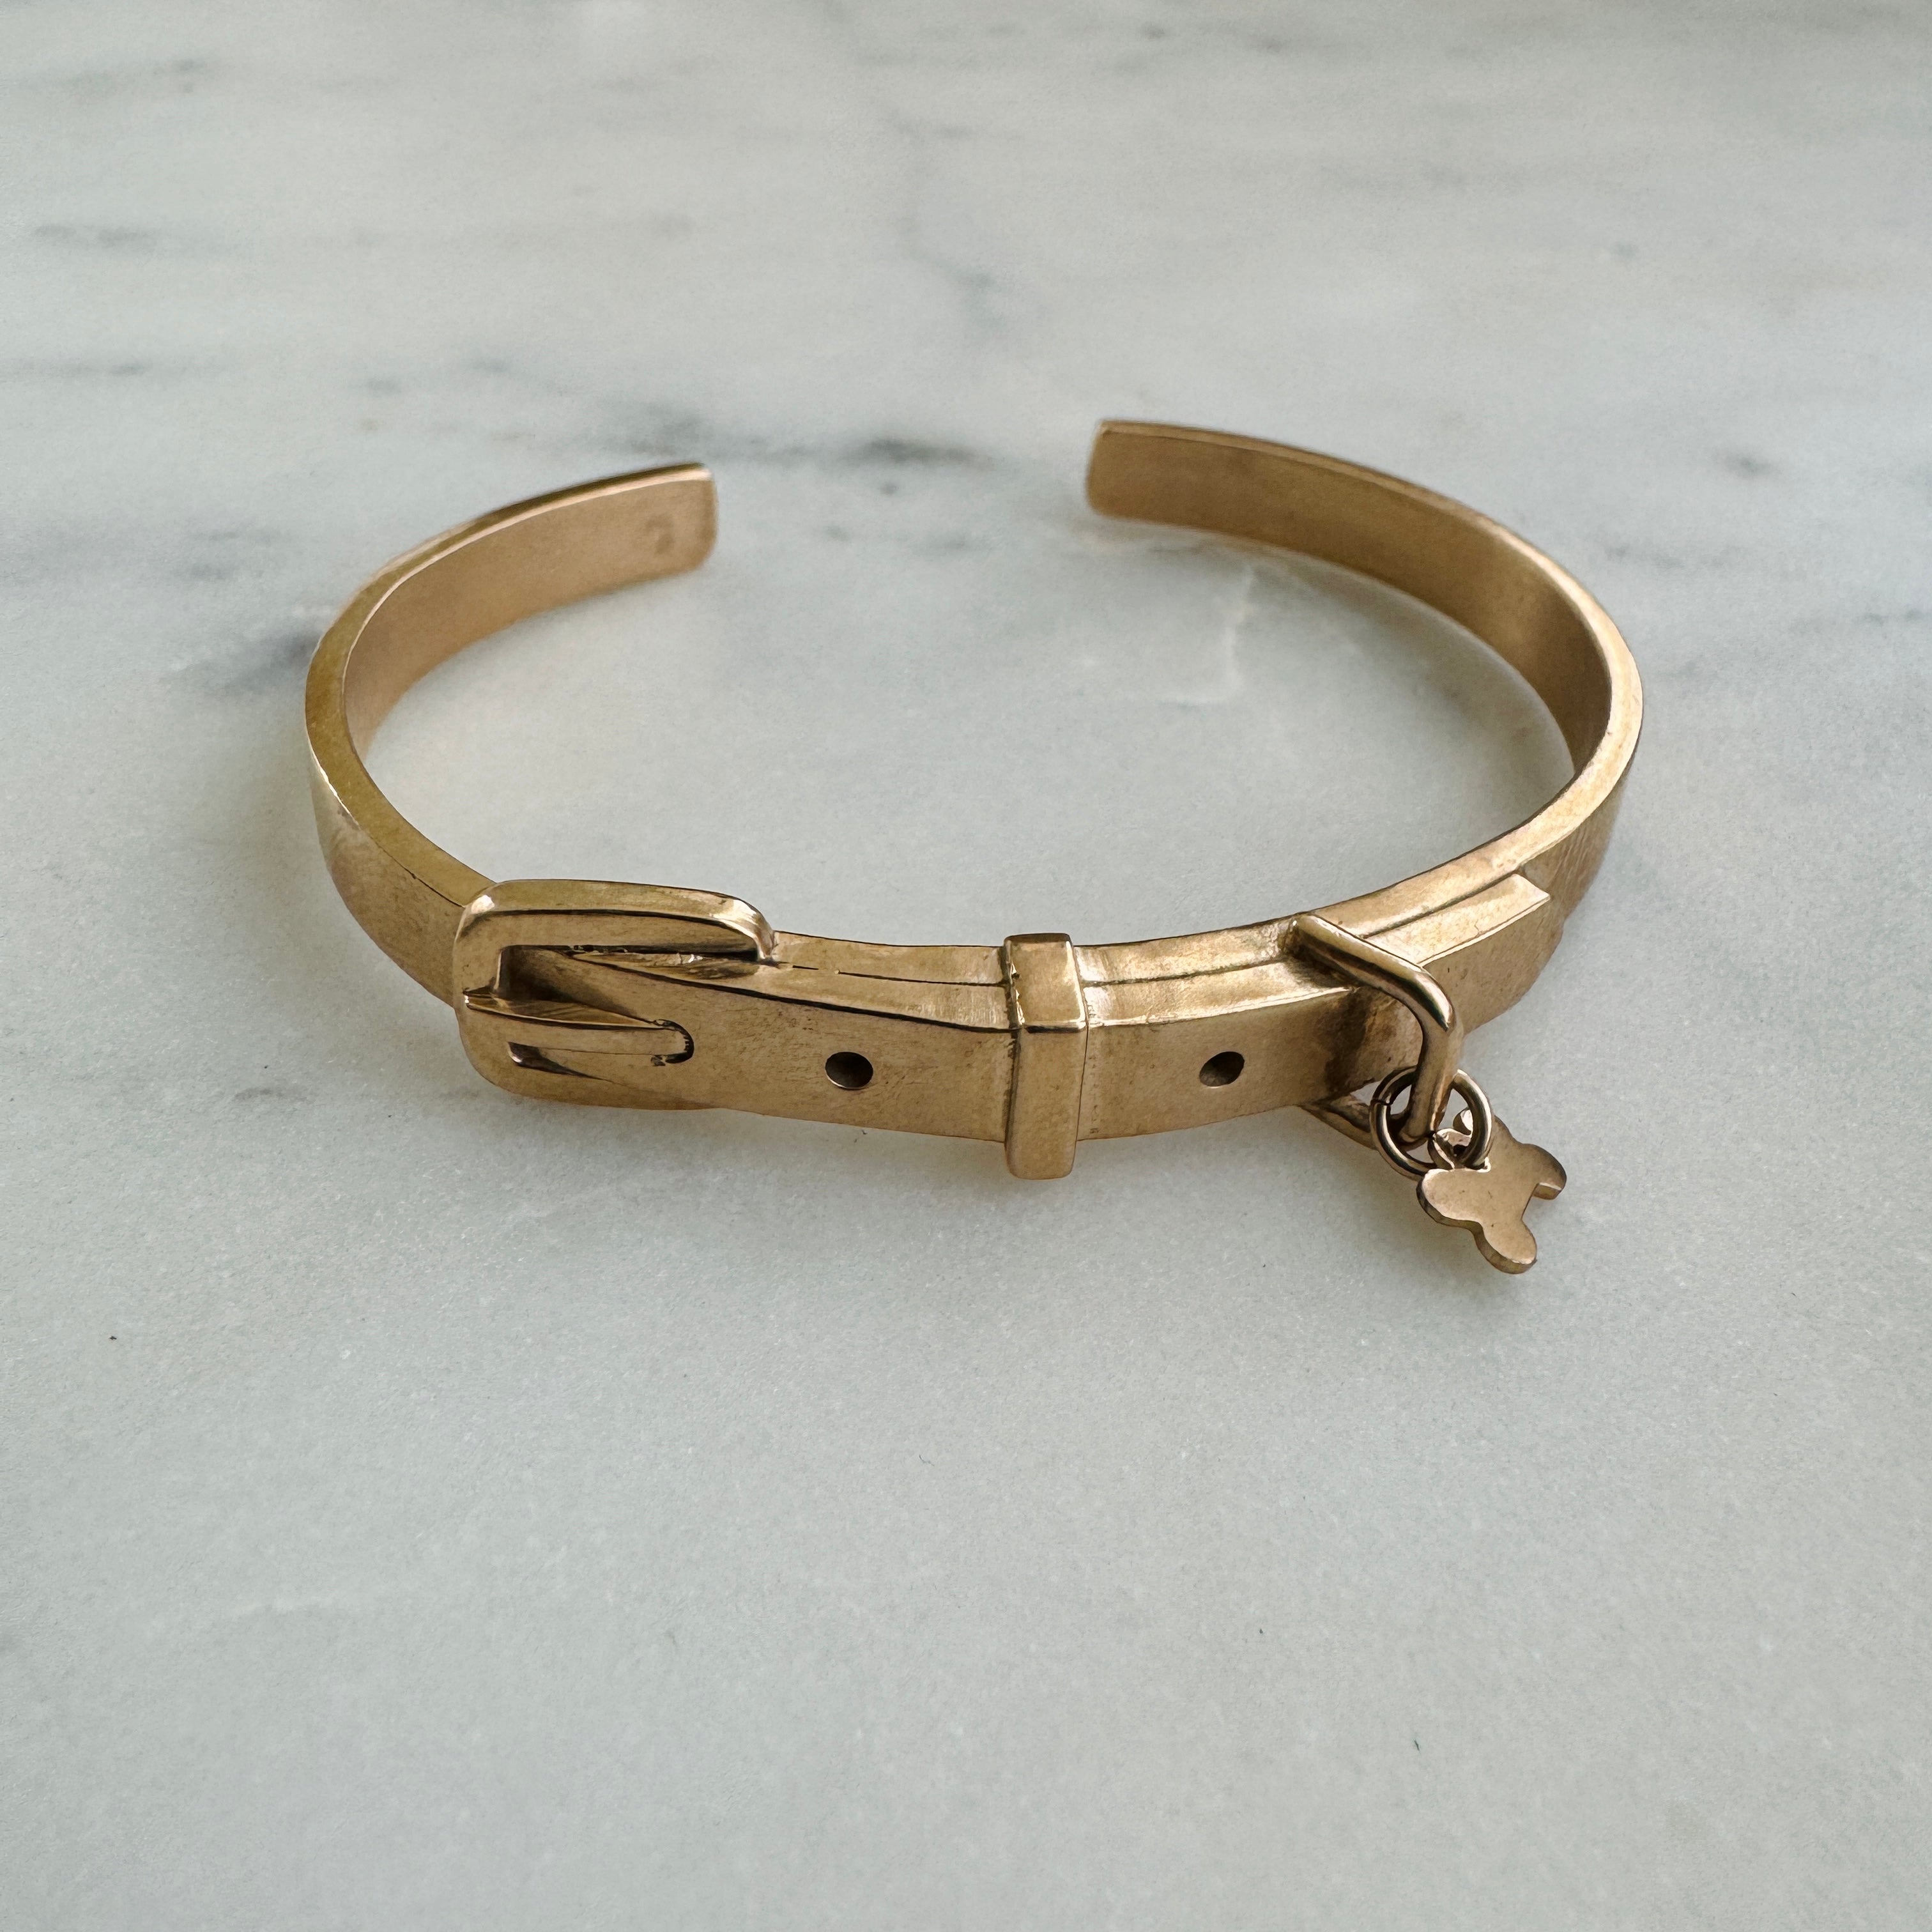 Amazon.com: ECLIPSE DESIGNS Handmade 14k Gold Filled and Sterling Silver  Bracelet - Forget-Me-Not Flower Pattern - Gold Bracelets For Women - Made  in Alaska (Medium - 7 1/4